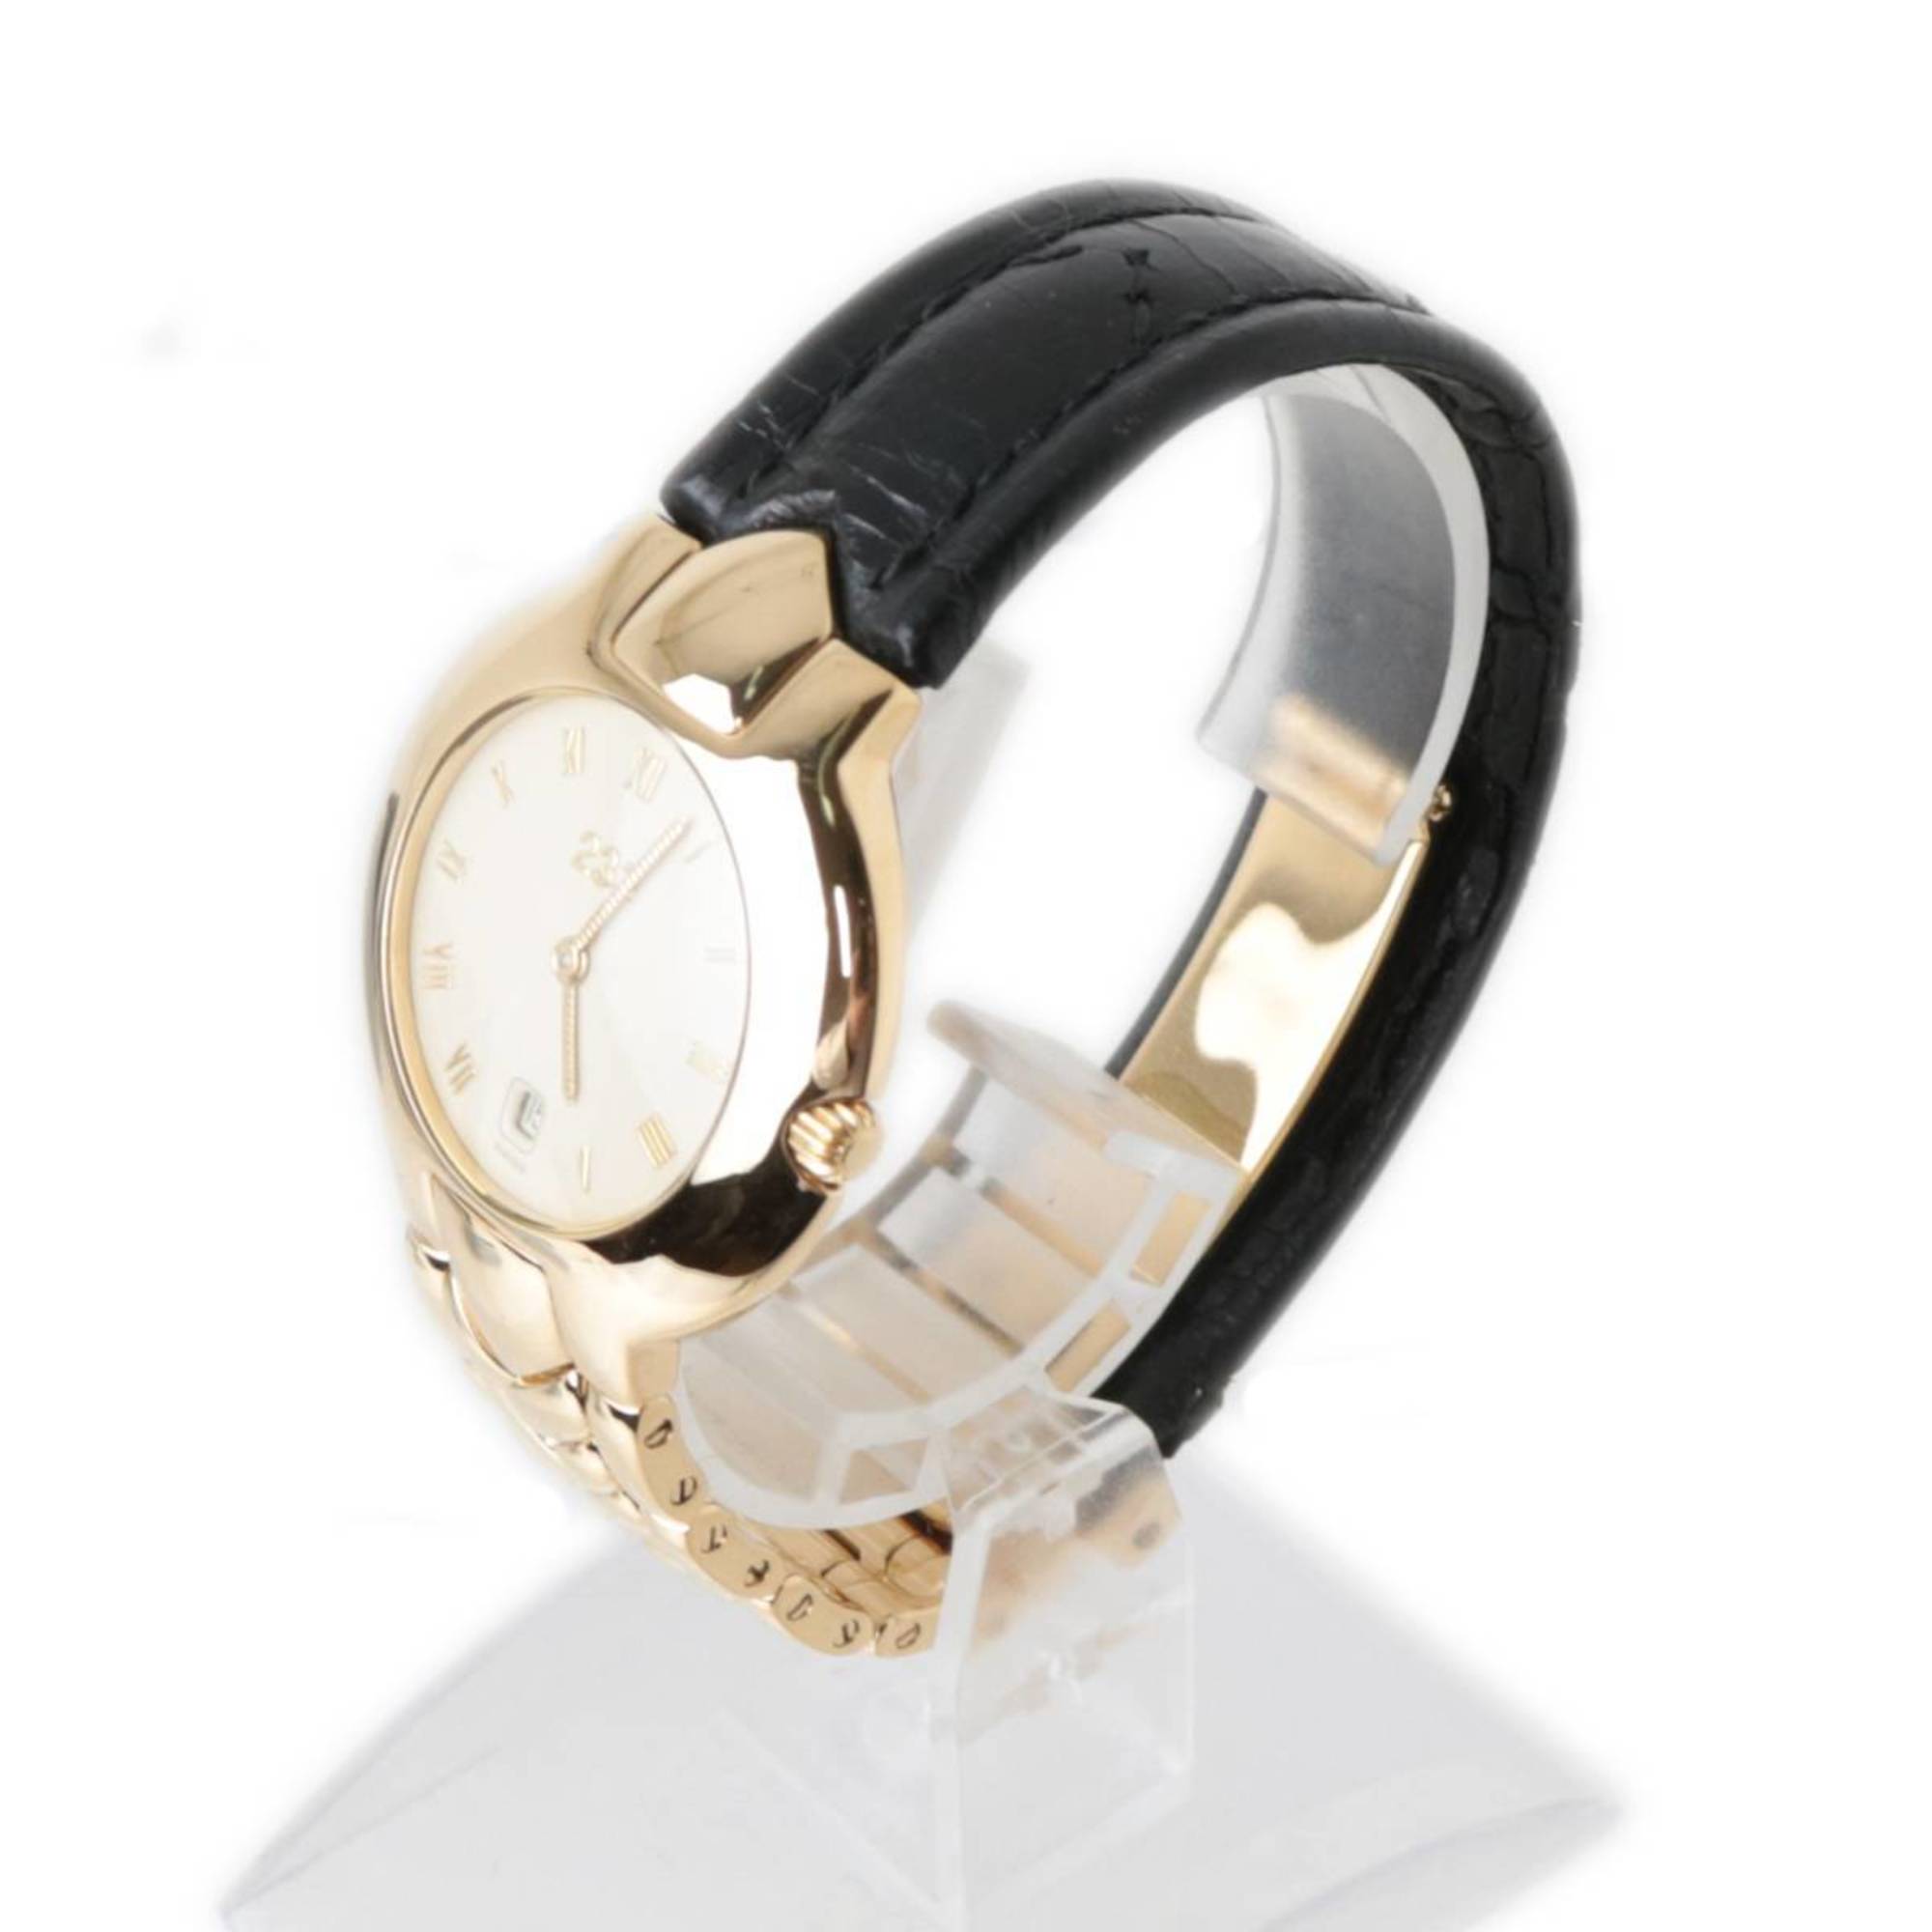 Gianni Versace/Gianni Versace Atelier Limited Edition Wristwatch Quartz K18 x Leather 78021B